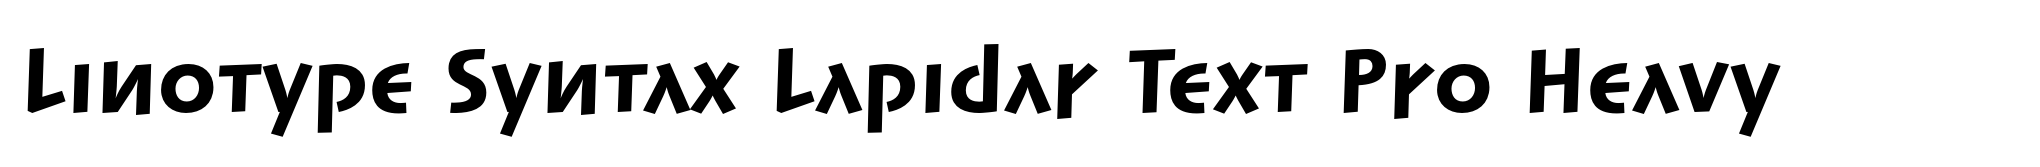 Linotype Syntax Lapidar Text Pro Heavy image